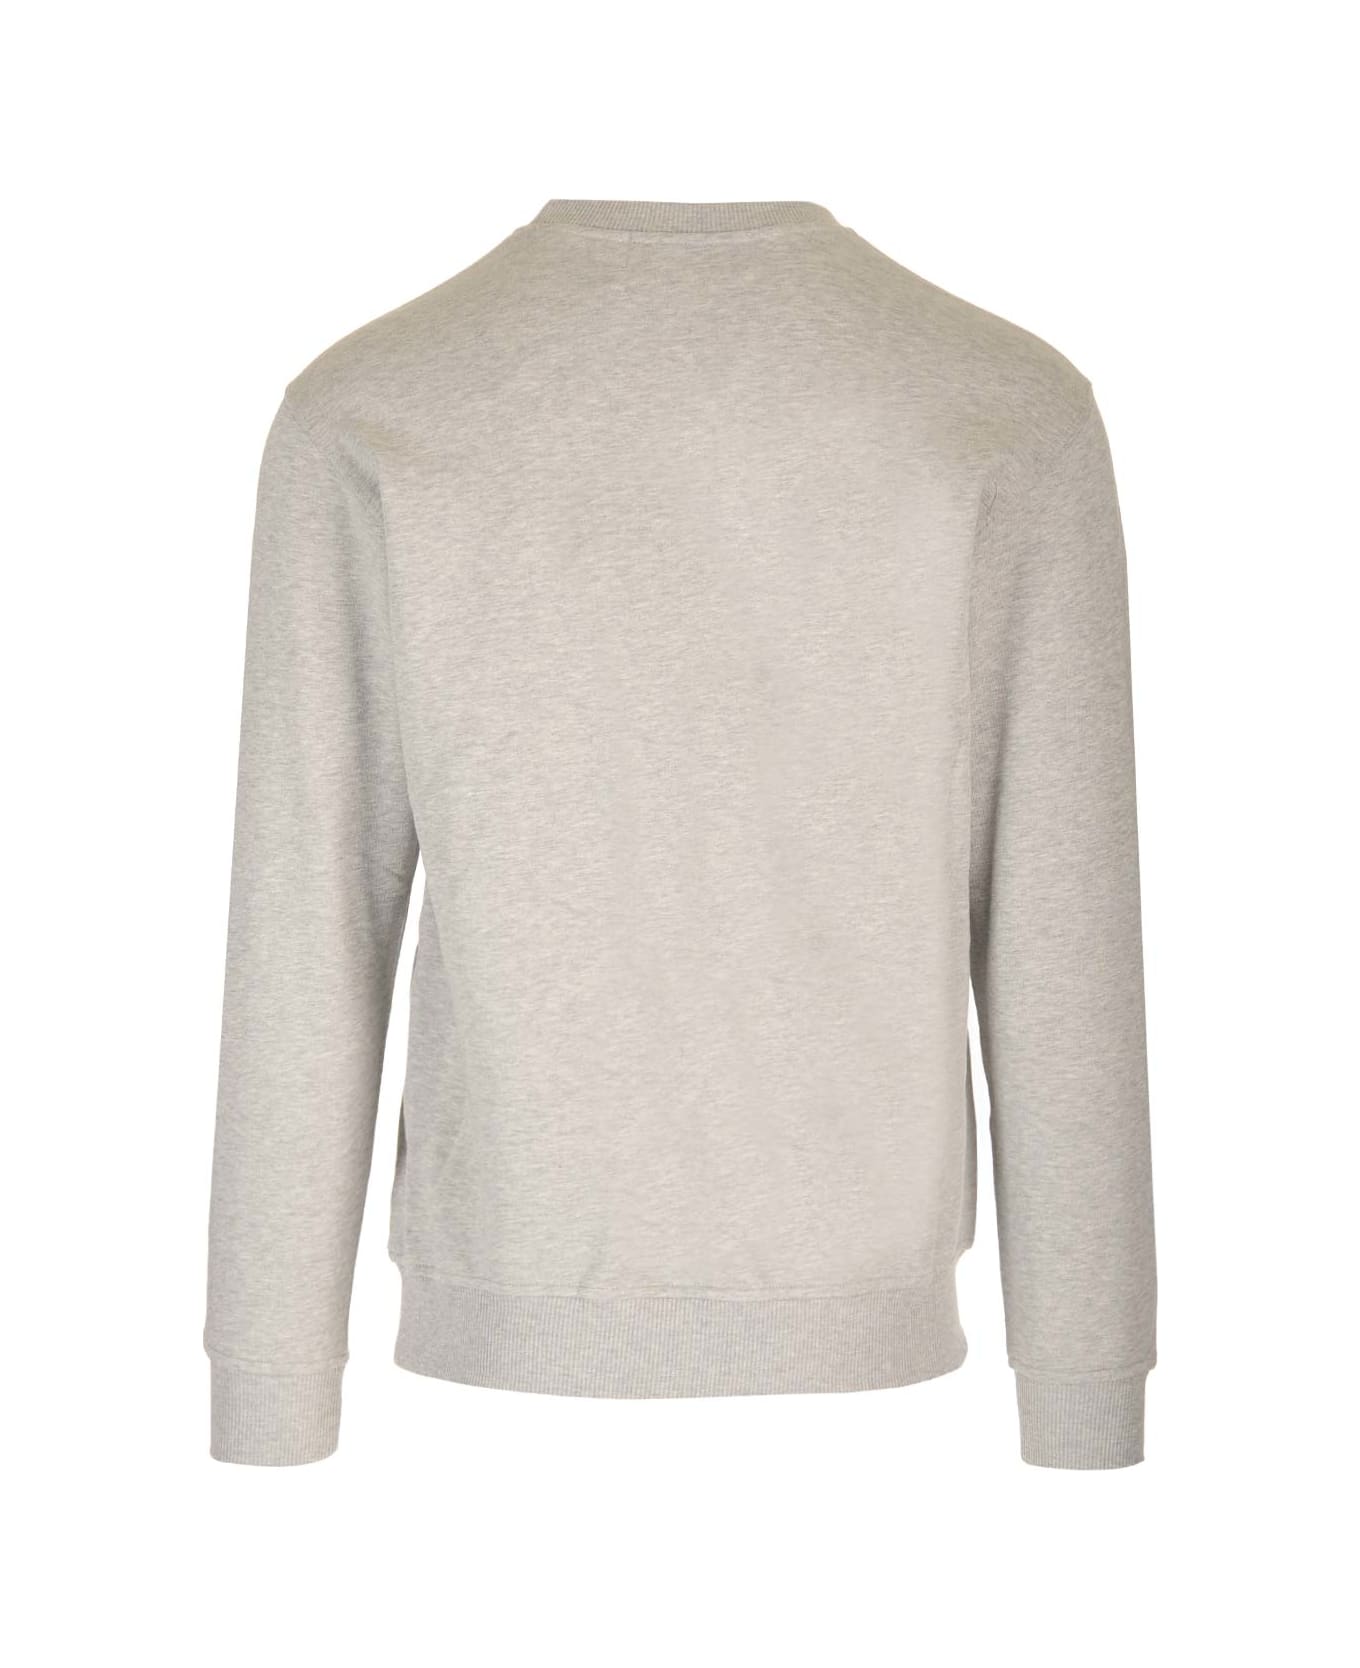 Comme des Garçons Shirt Grey Lacoste Sweatshirt - Top Grey フリース